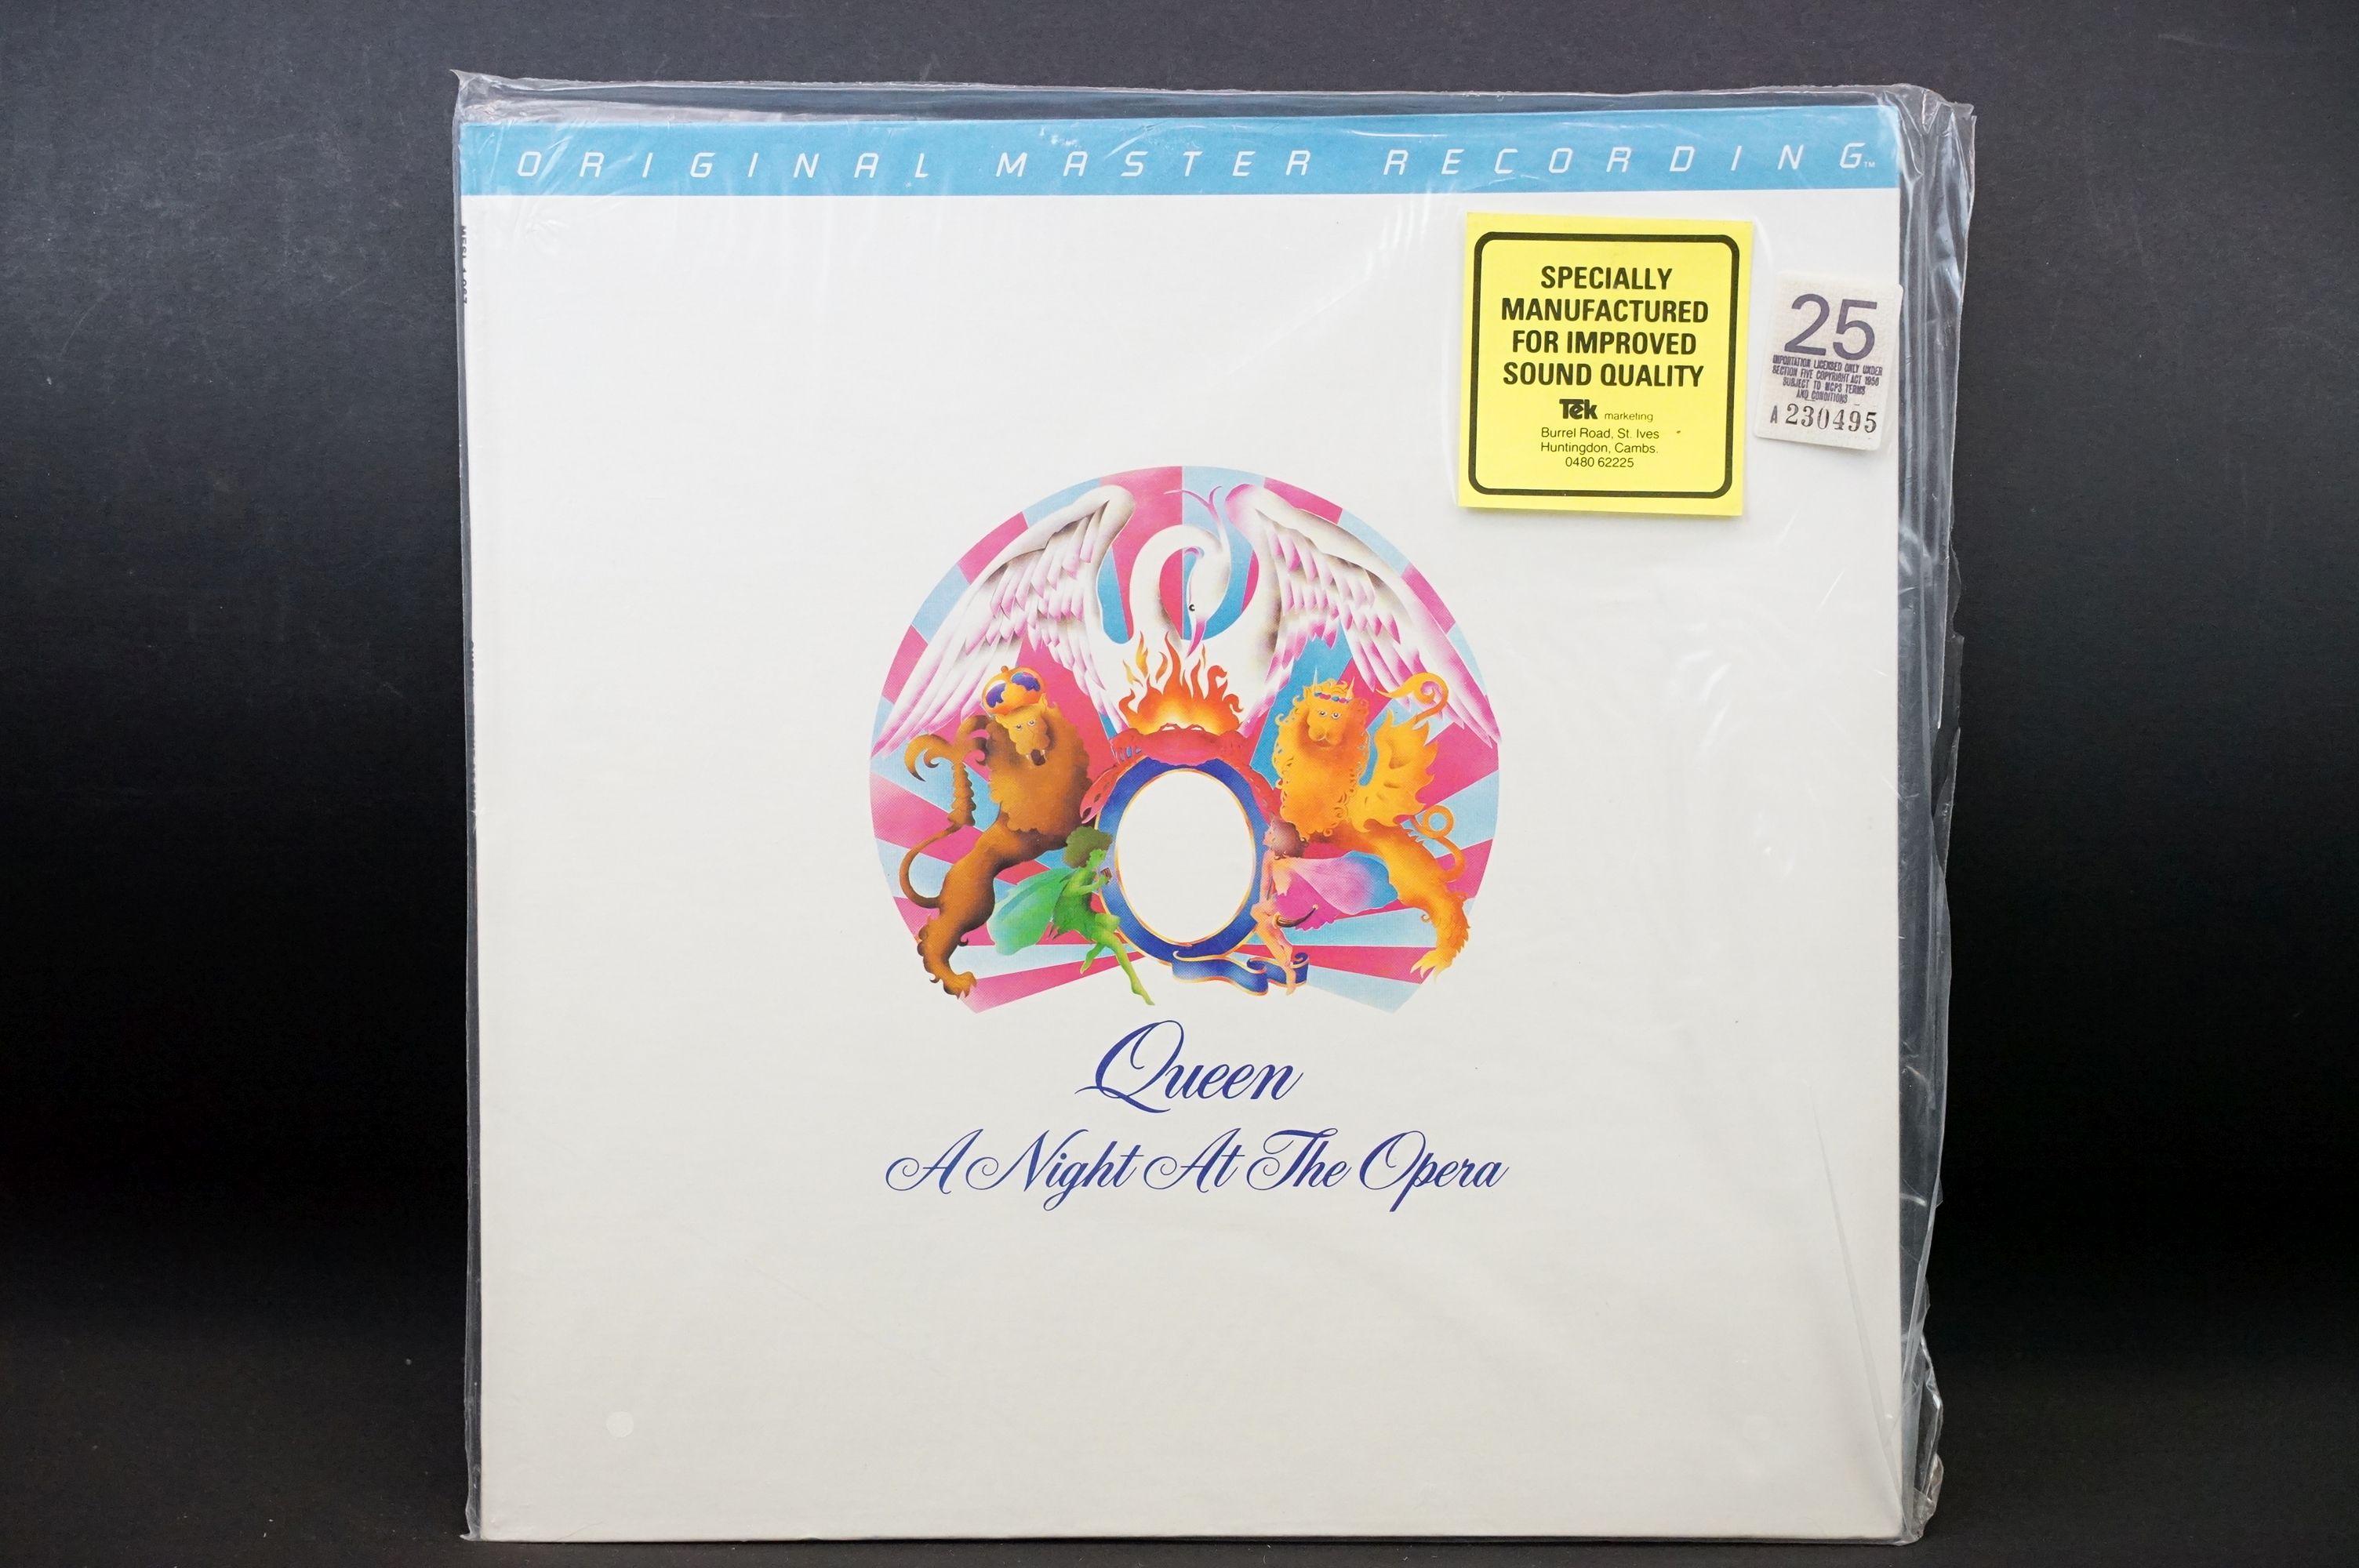 Vinyl - Queen A Night At The Opera. Original US 1982 Original Master Recording LP, with gatefold